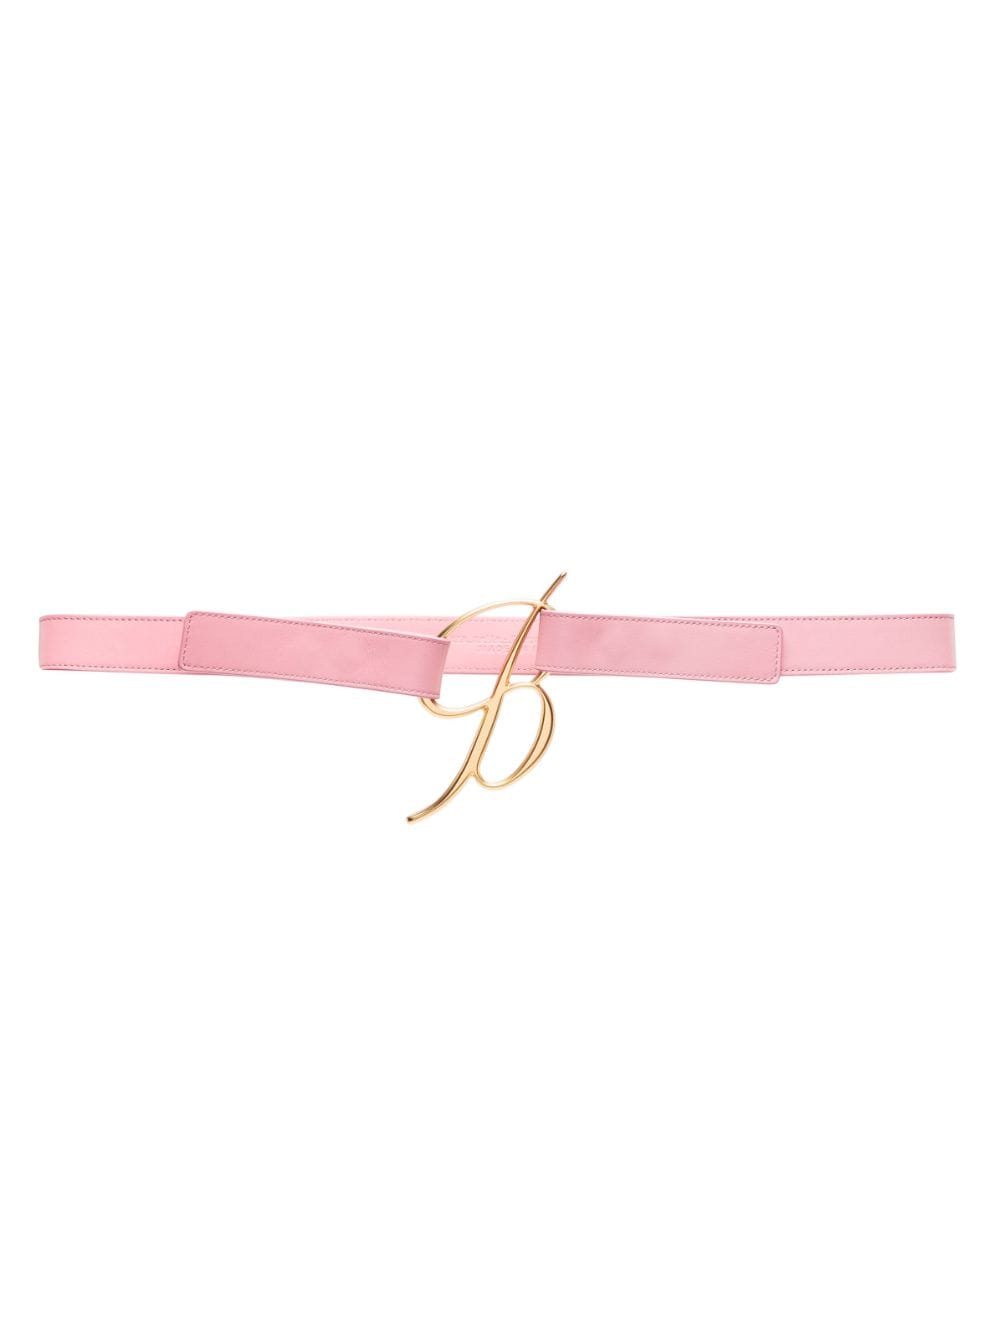 Blumarine B-buckle leather belt - Pink